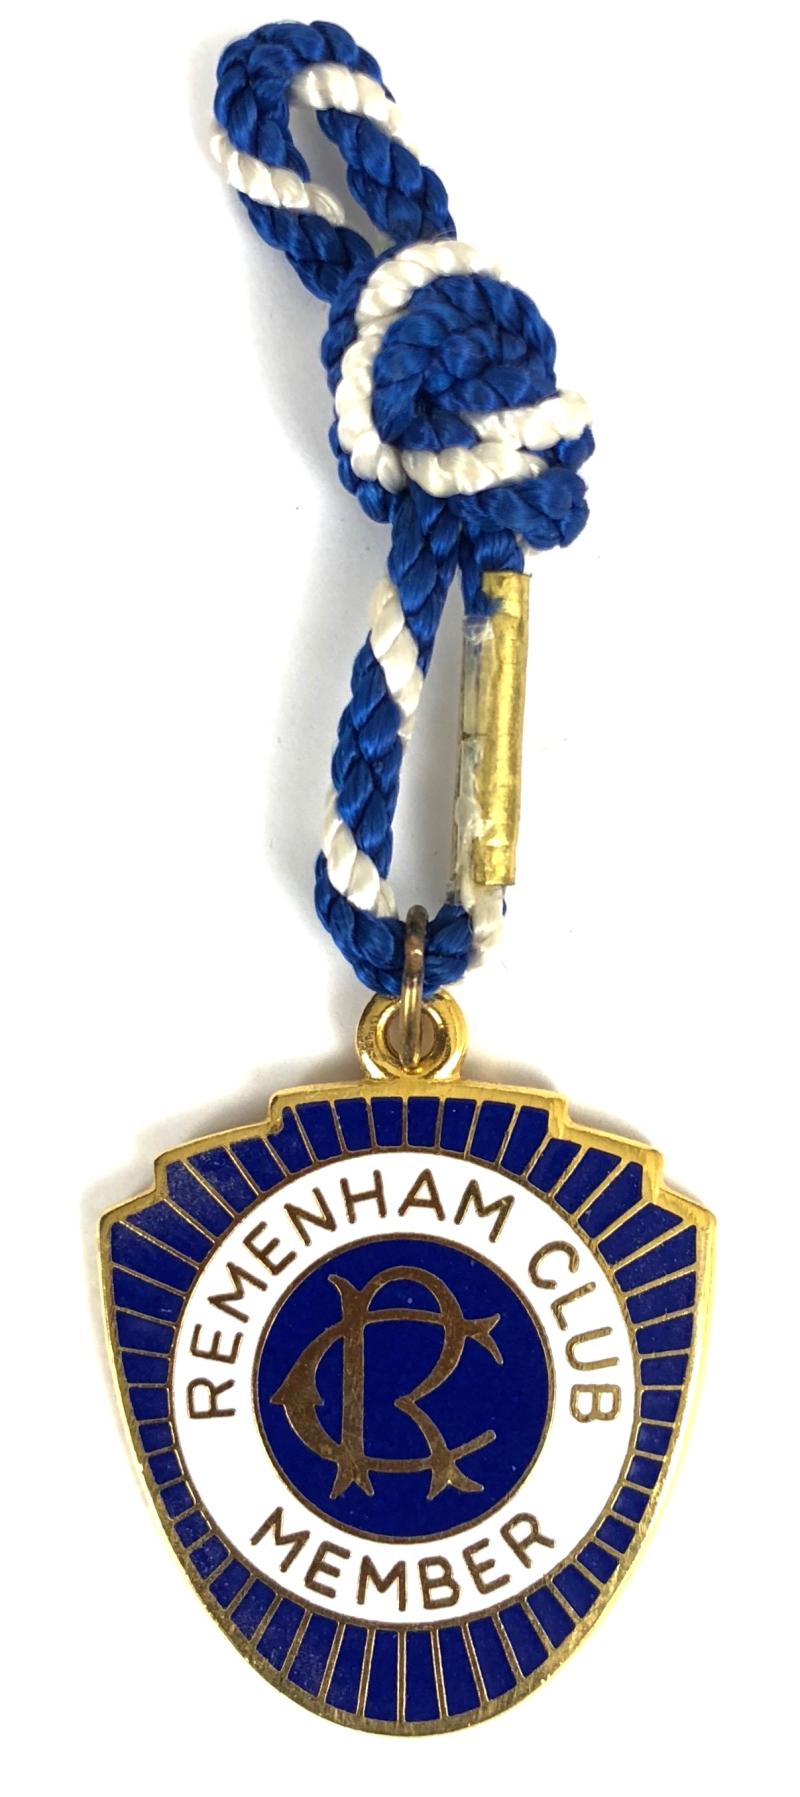 2006 Remenham Rowing Club badge Henley Royal Regatta